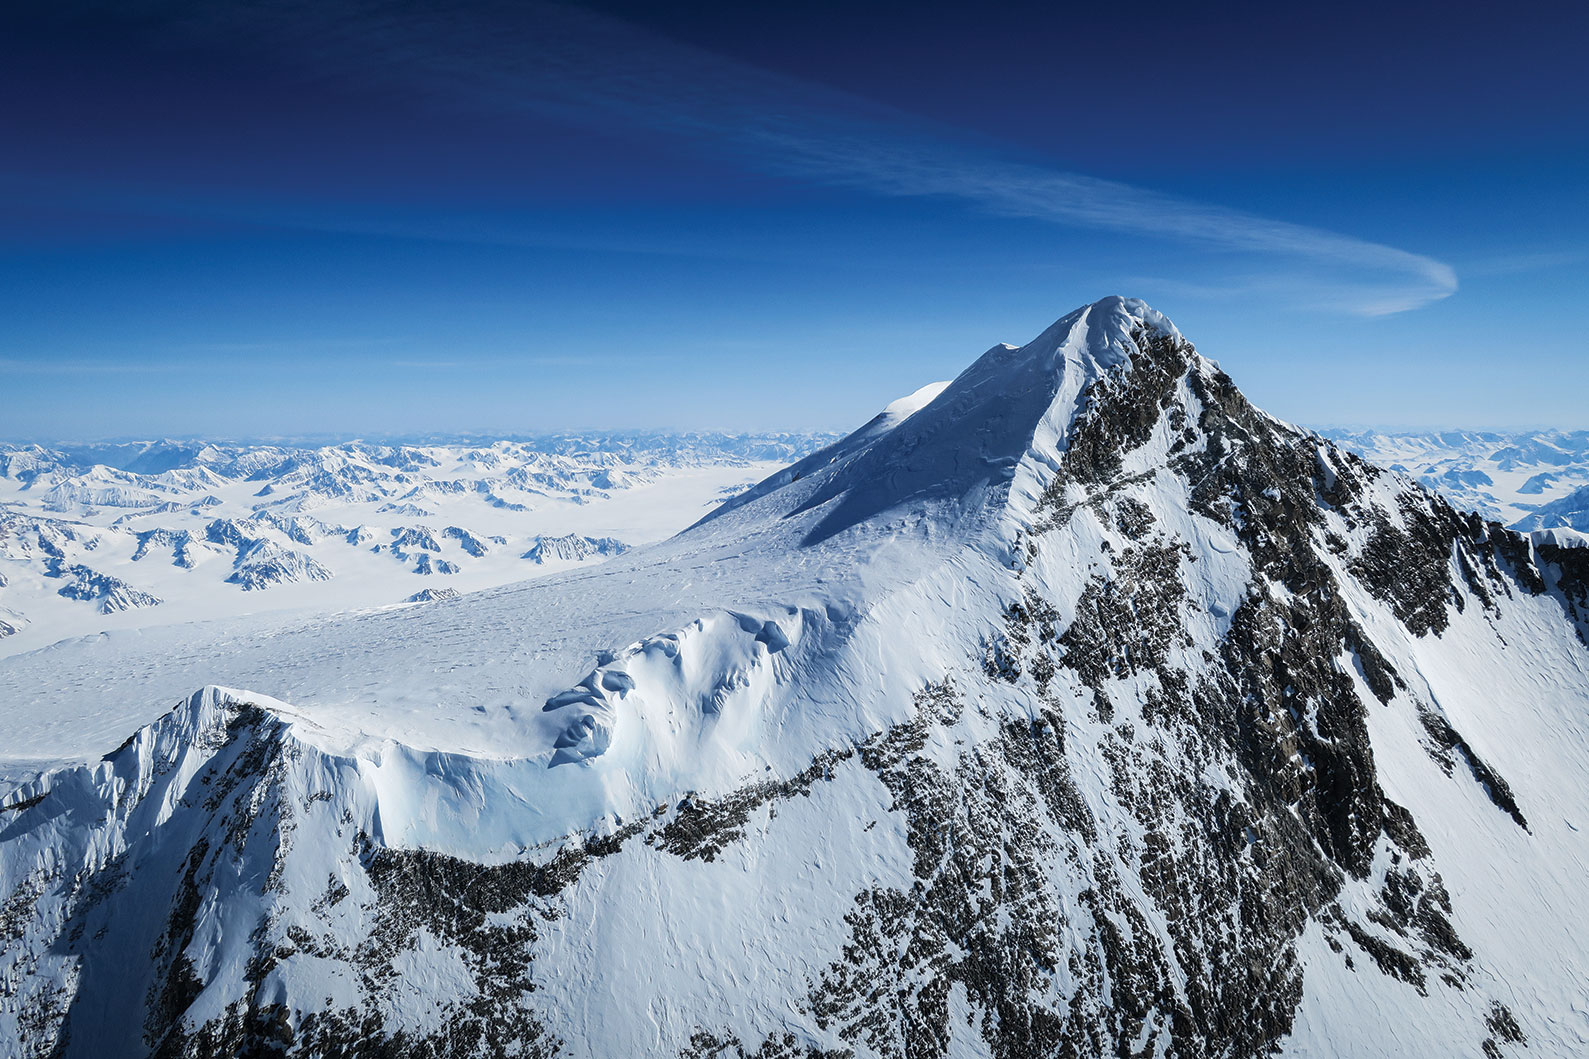 Logan main summit snow covered mountain peak with vast open blue sky